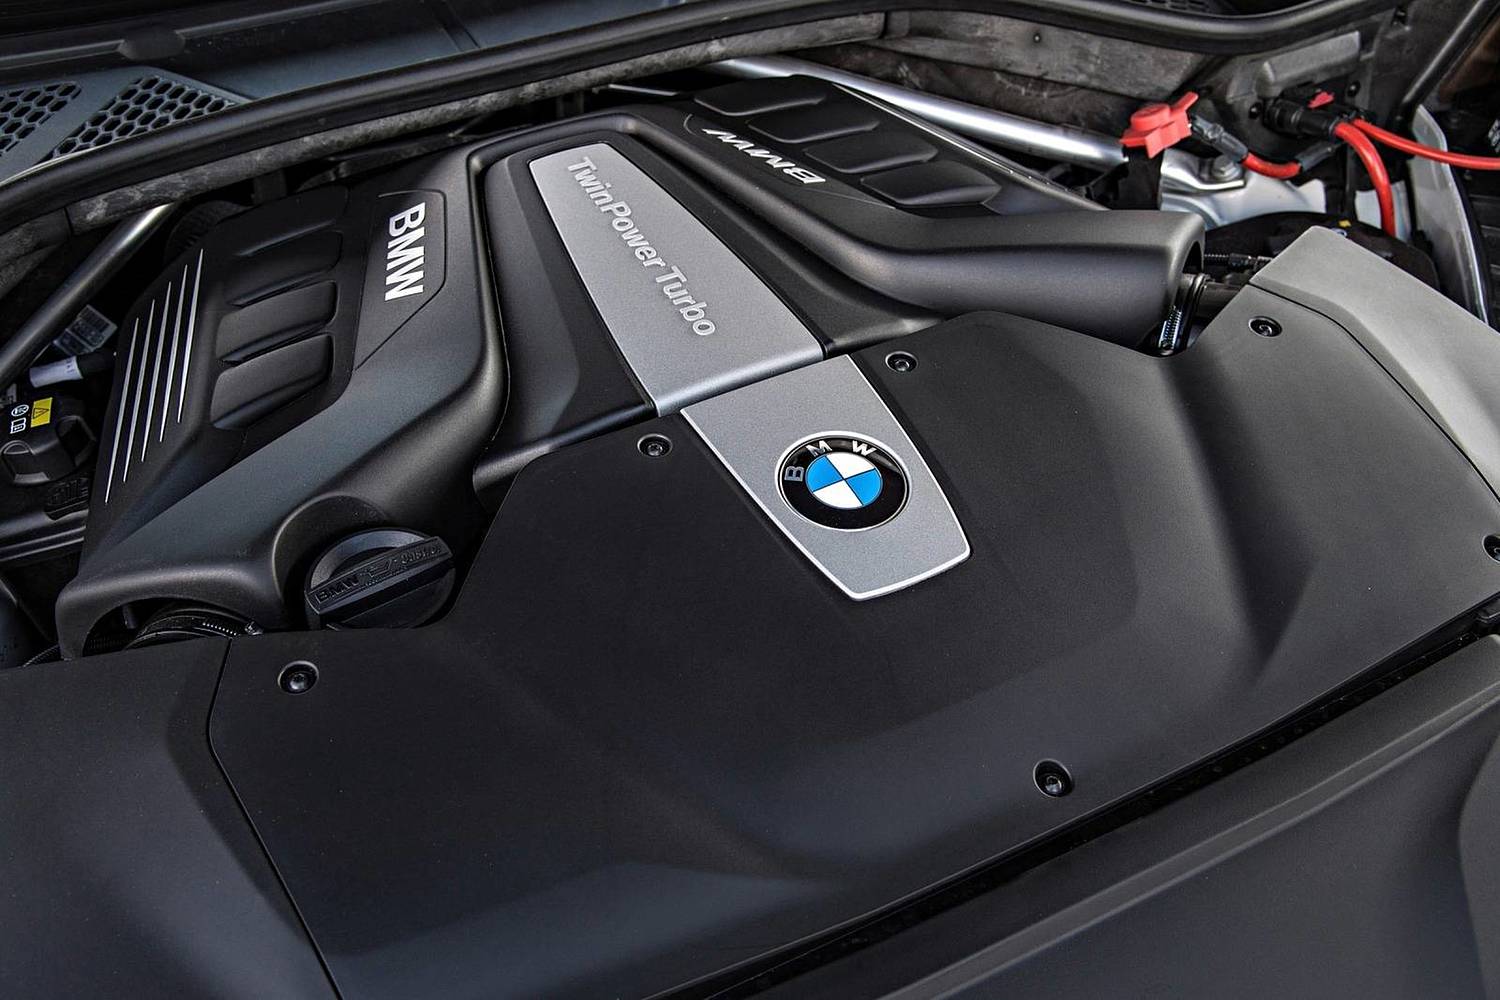 BMW X6 xDrive50i 4dr SUV 4.4L V8 Engine (2016 model year shown)